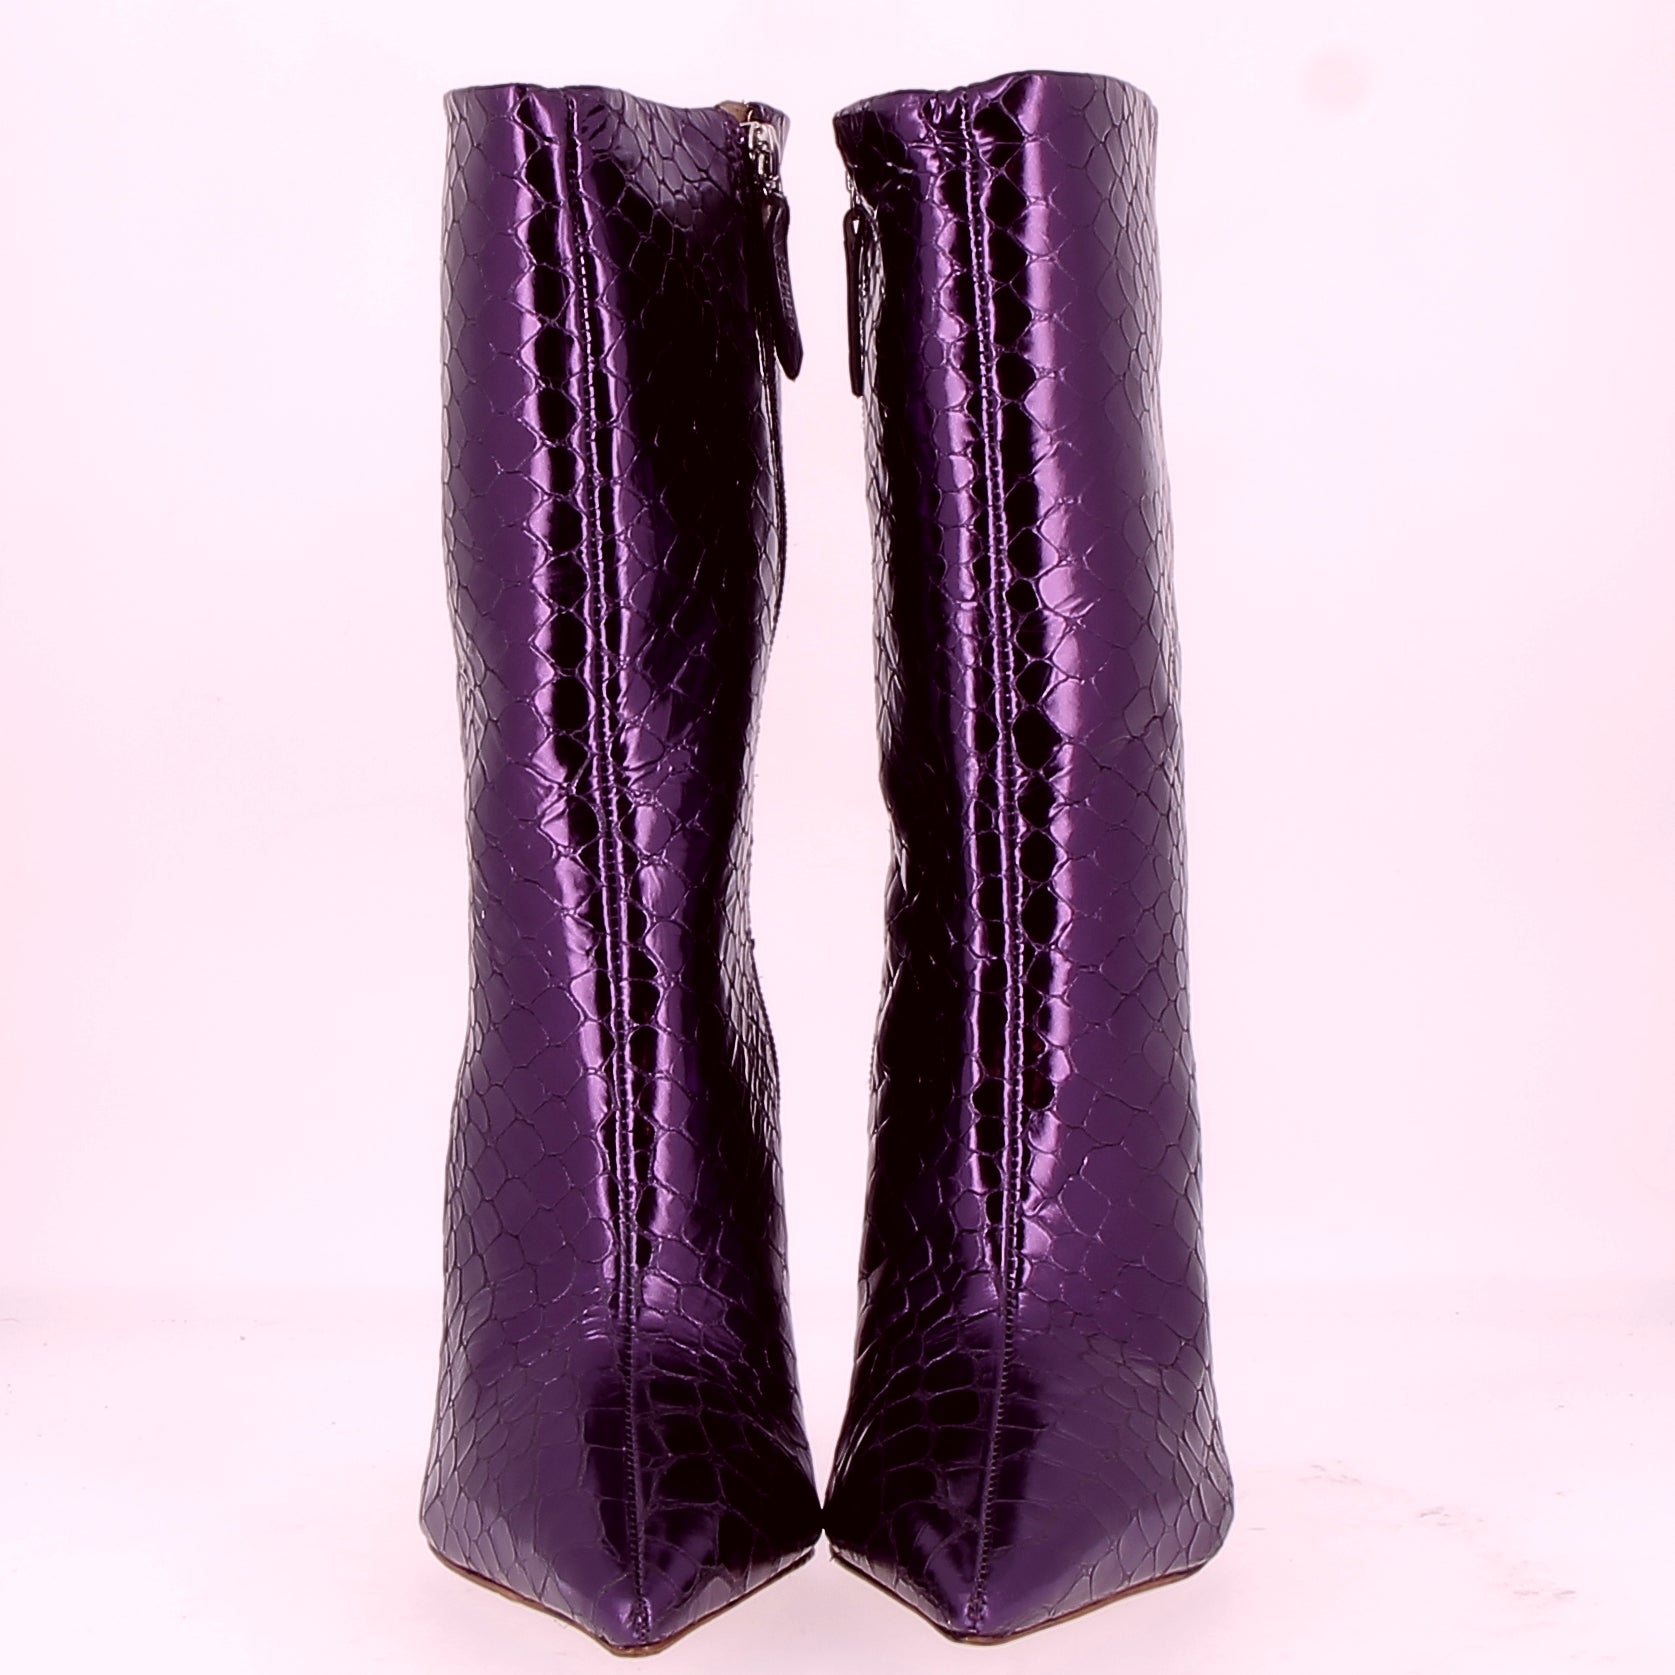 Schutz boot with purple metal crocodile finish